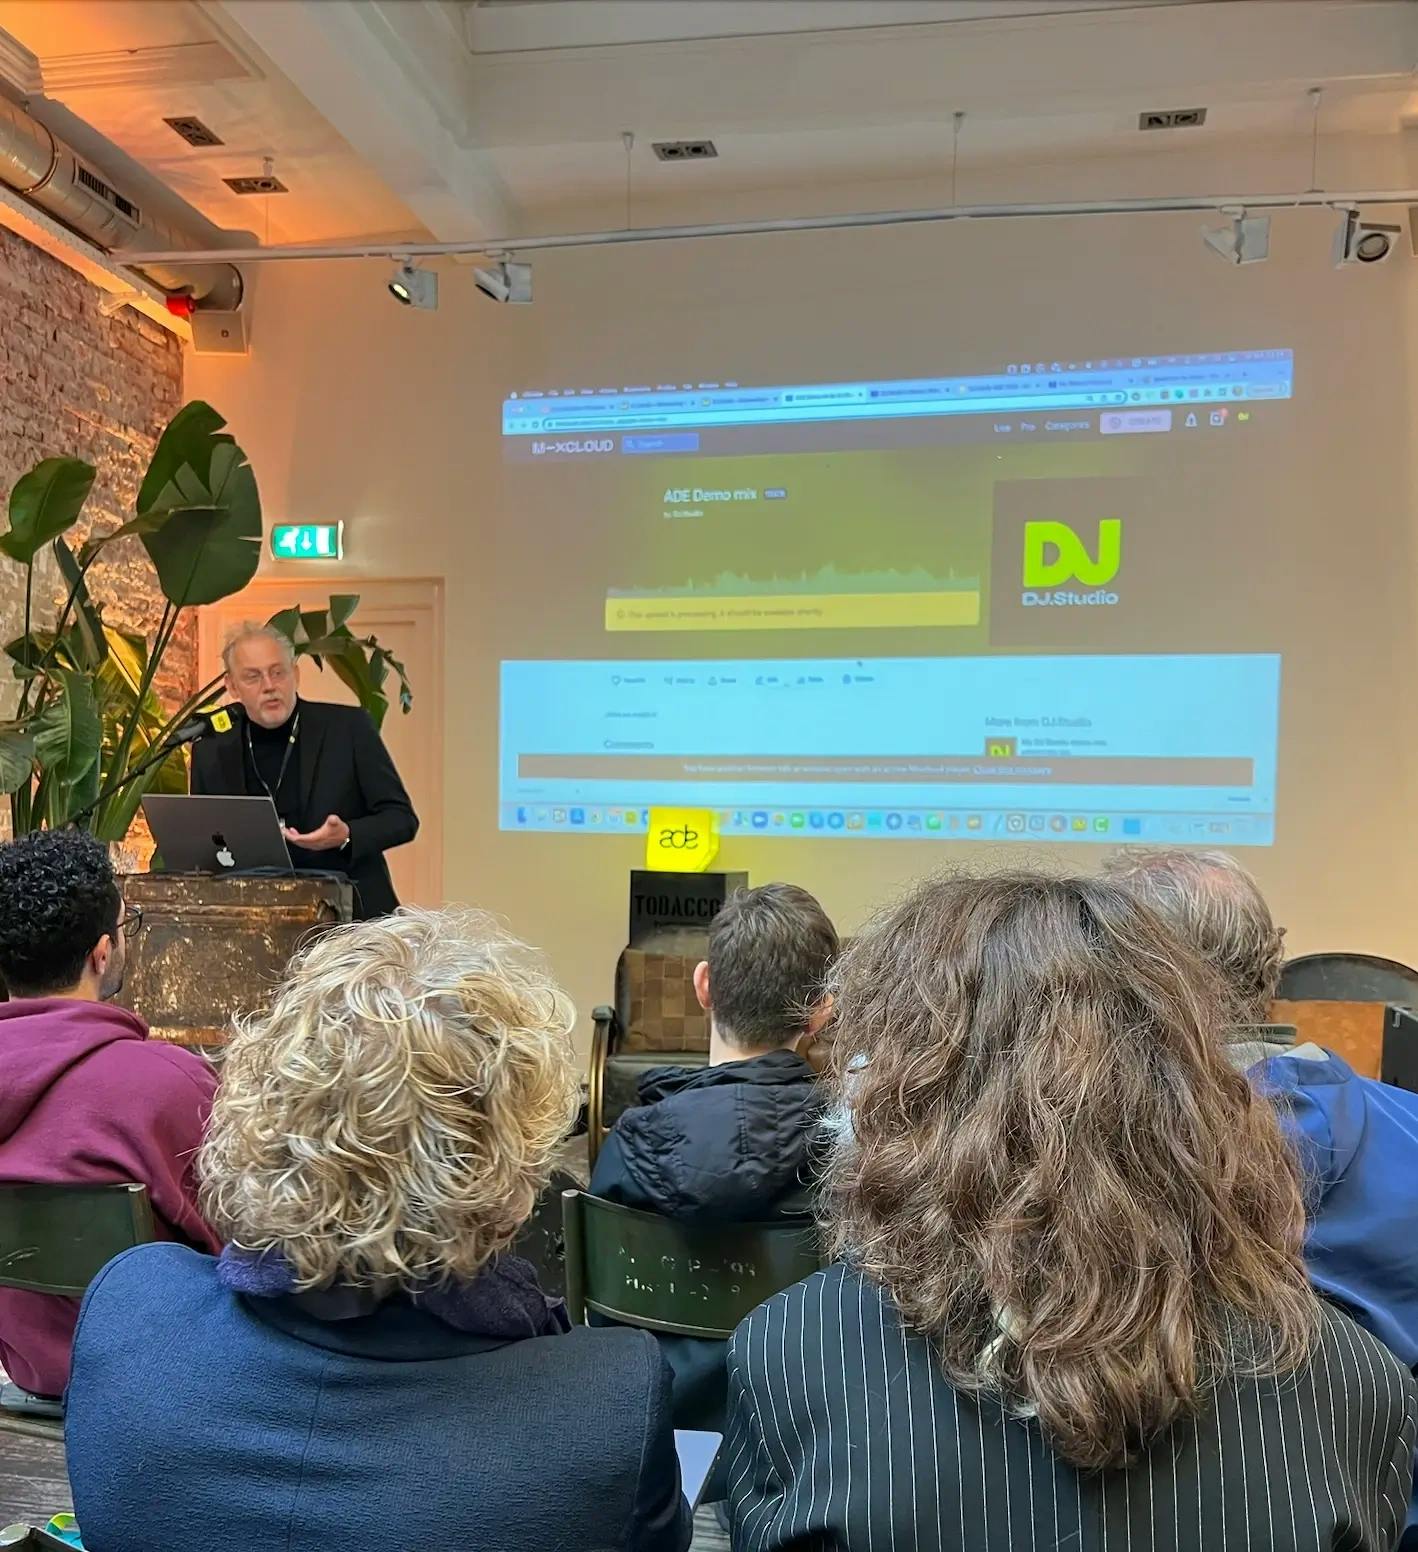 Siebrand Dijkstra presenting DJ.Studio at Amsterdam Dance Event